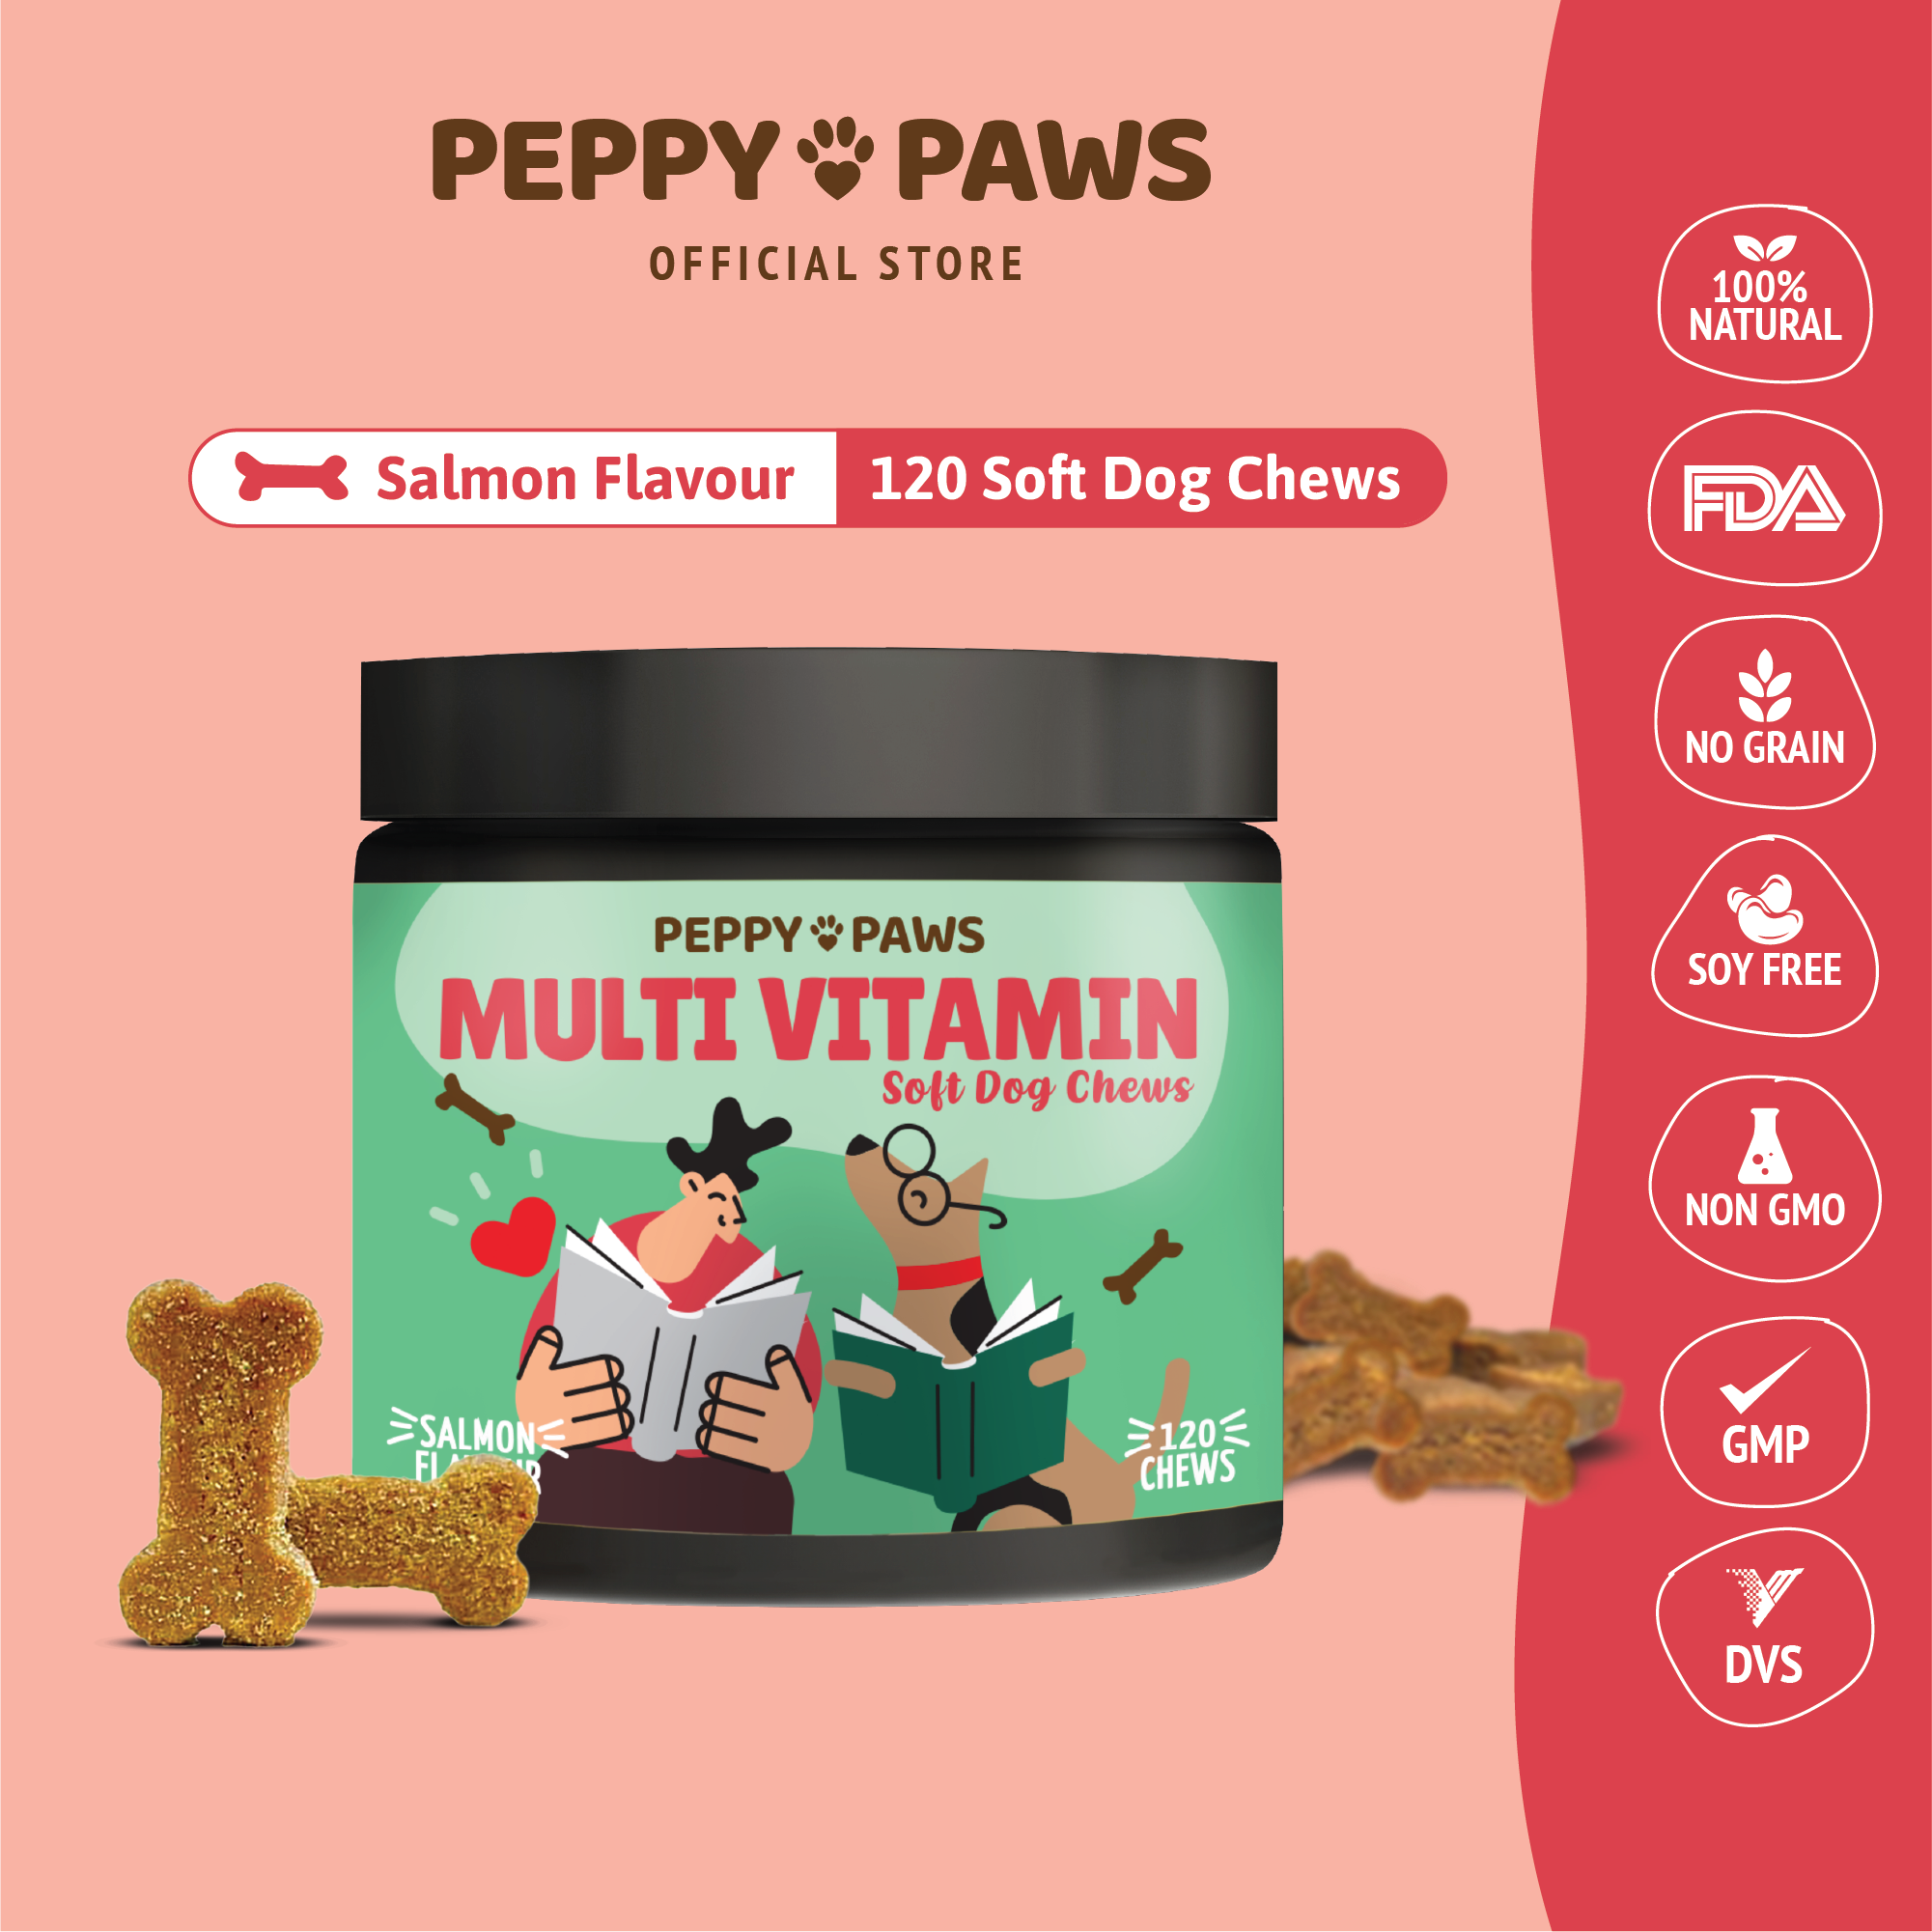 Peppy Paws Multivitamin Soft Dog Chews (120 Chews)